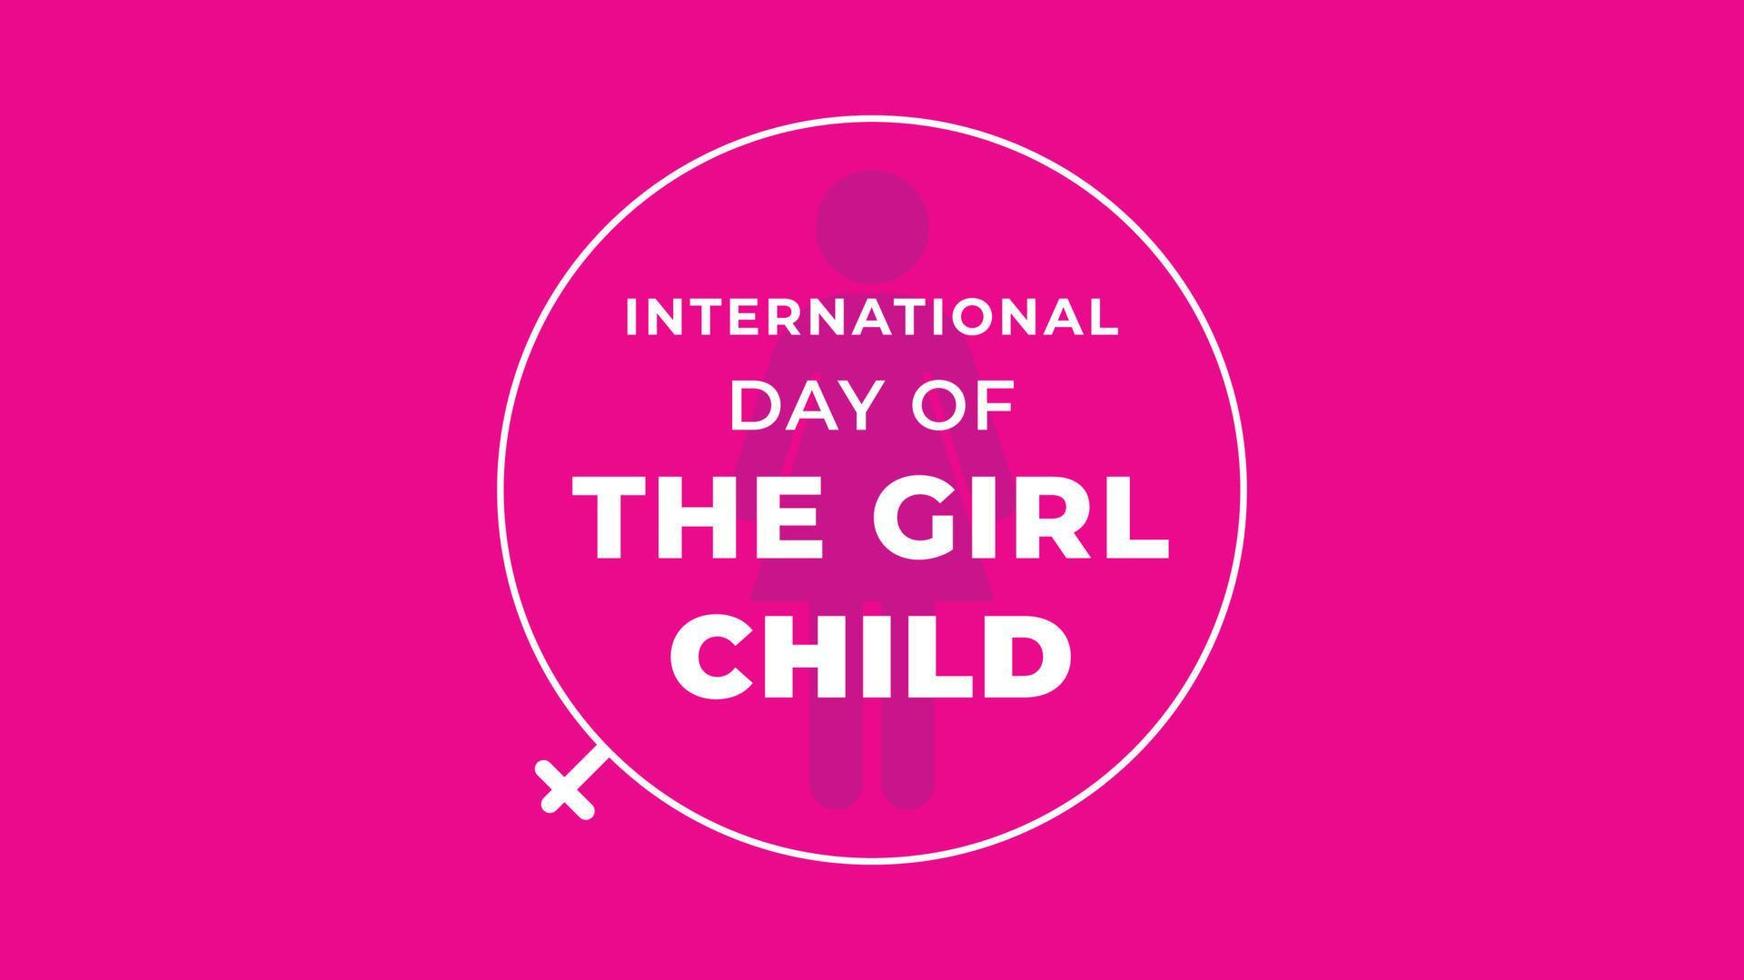 International Day of the Girl Child. Vector illustration